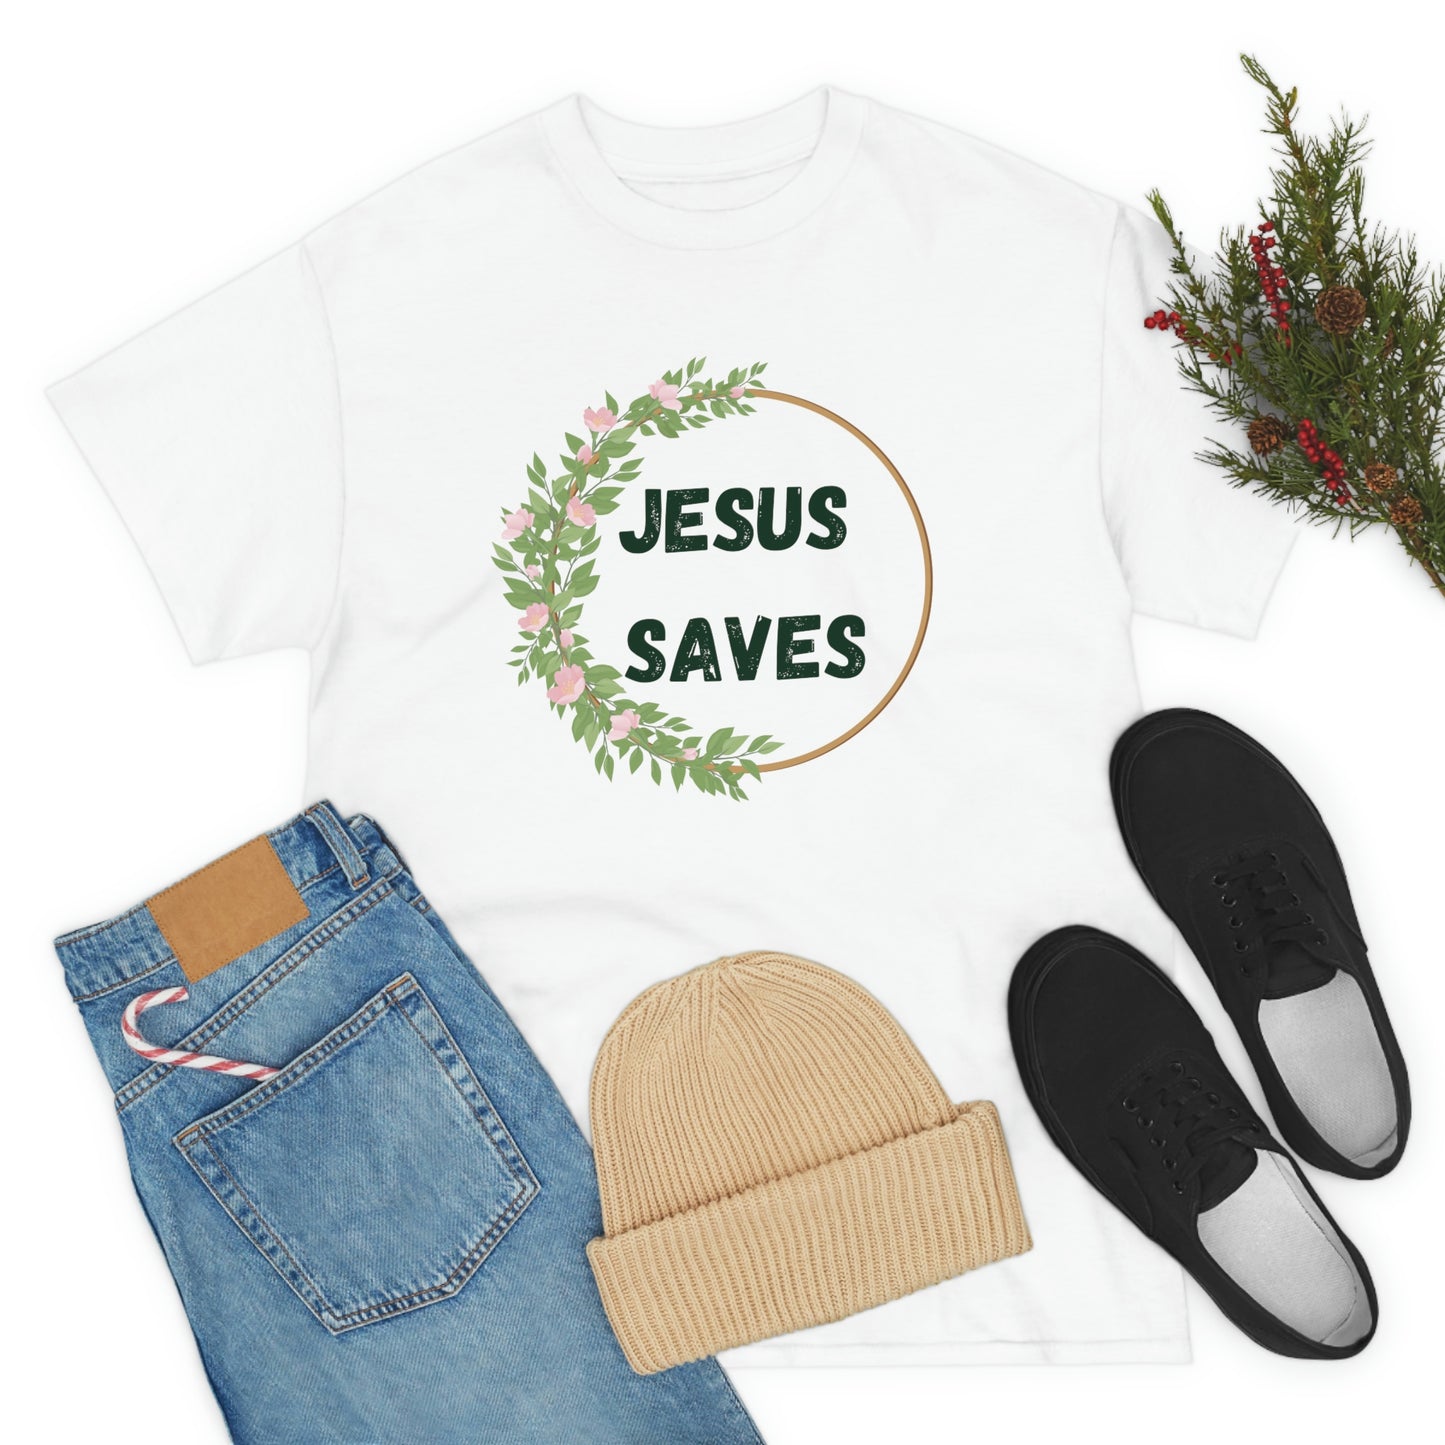 Jesus Saves - Men's Christian Cotton Tee